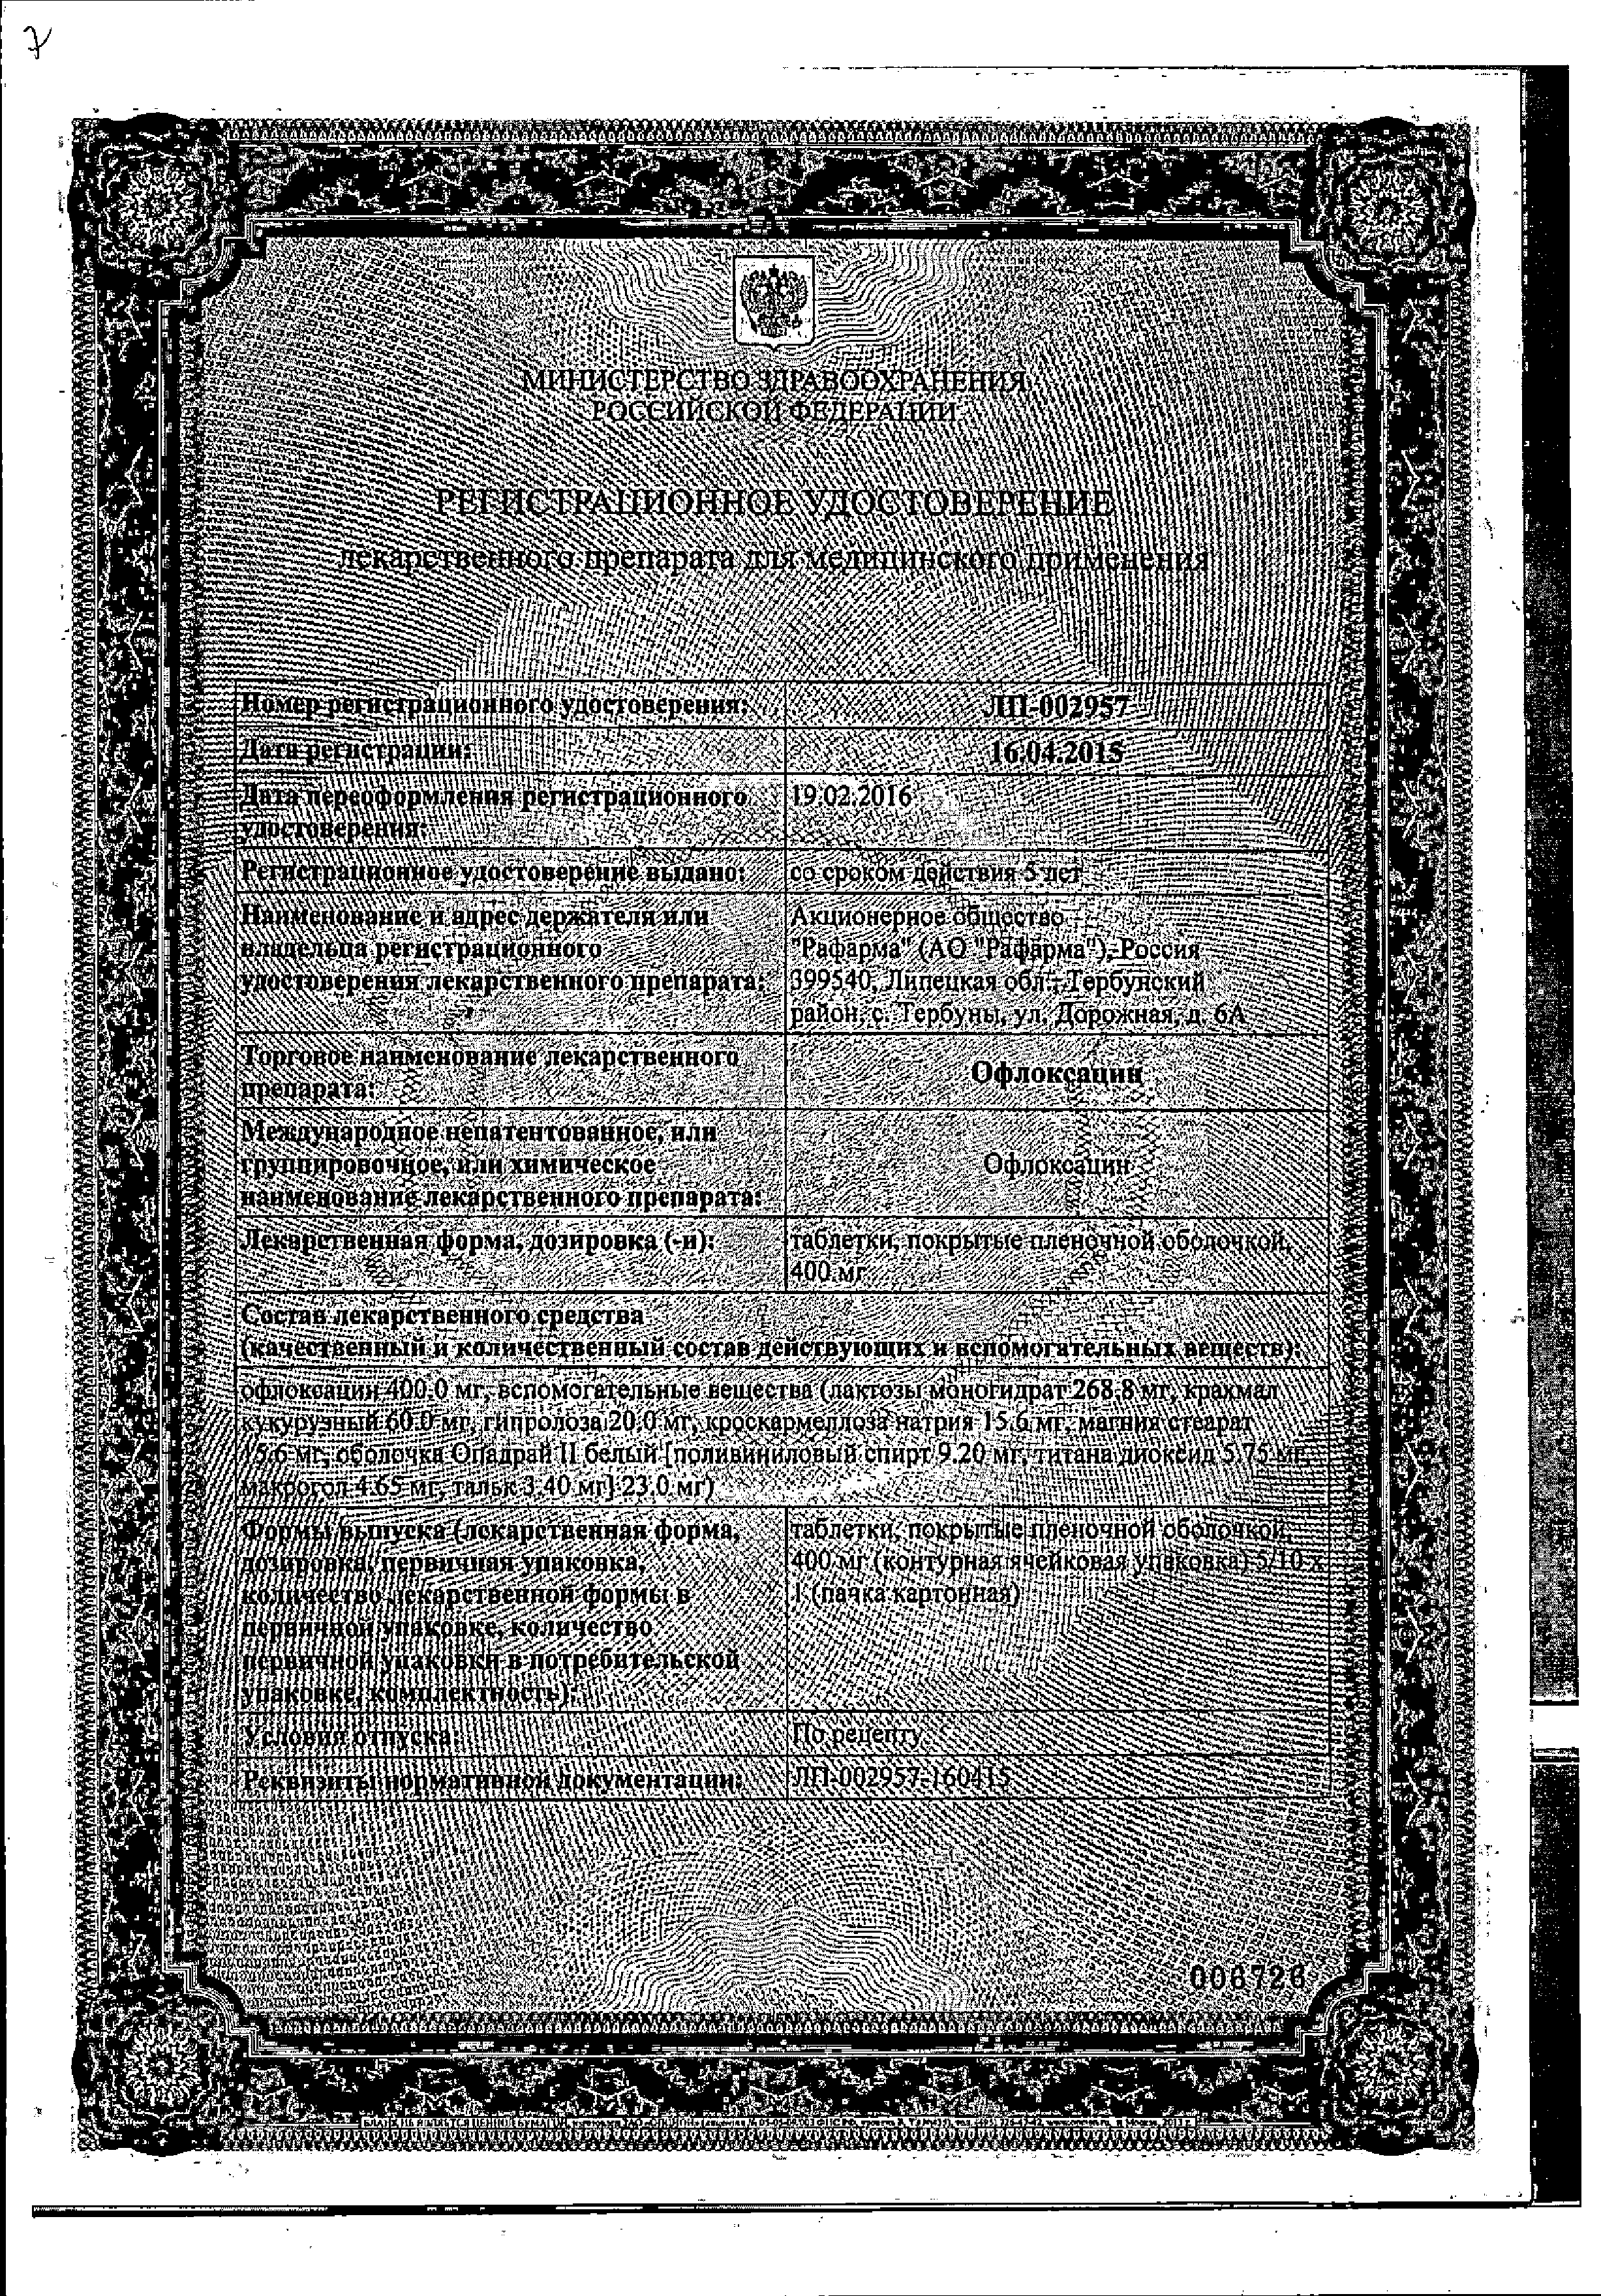 Офлоксацин сертификат